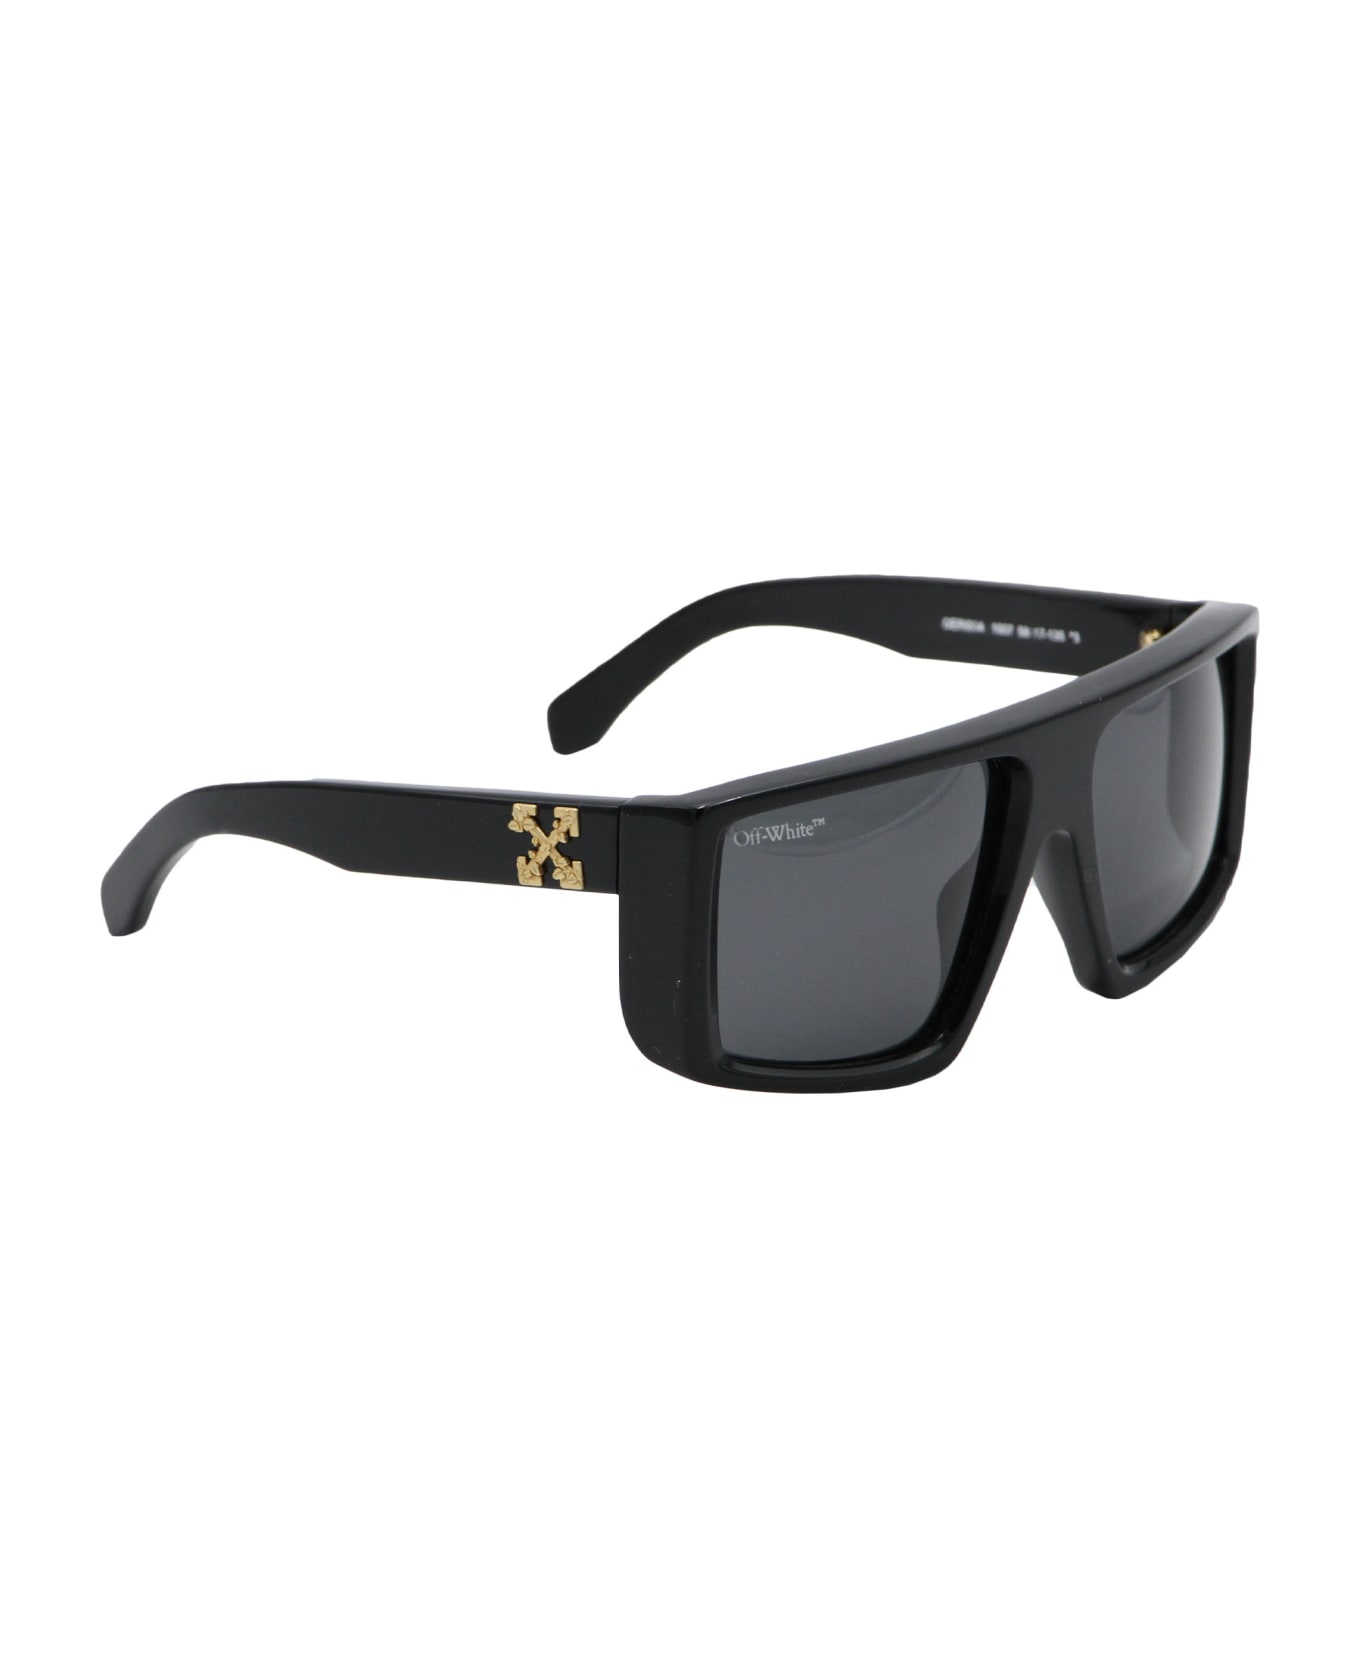 Off-White Squared Sunglasses - black